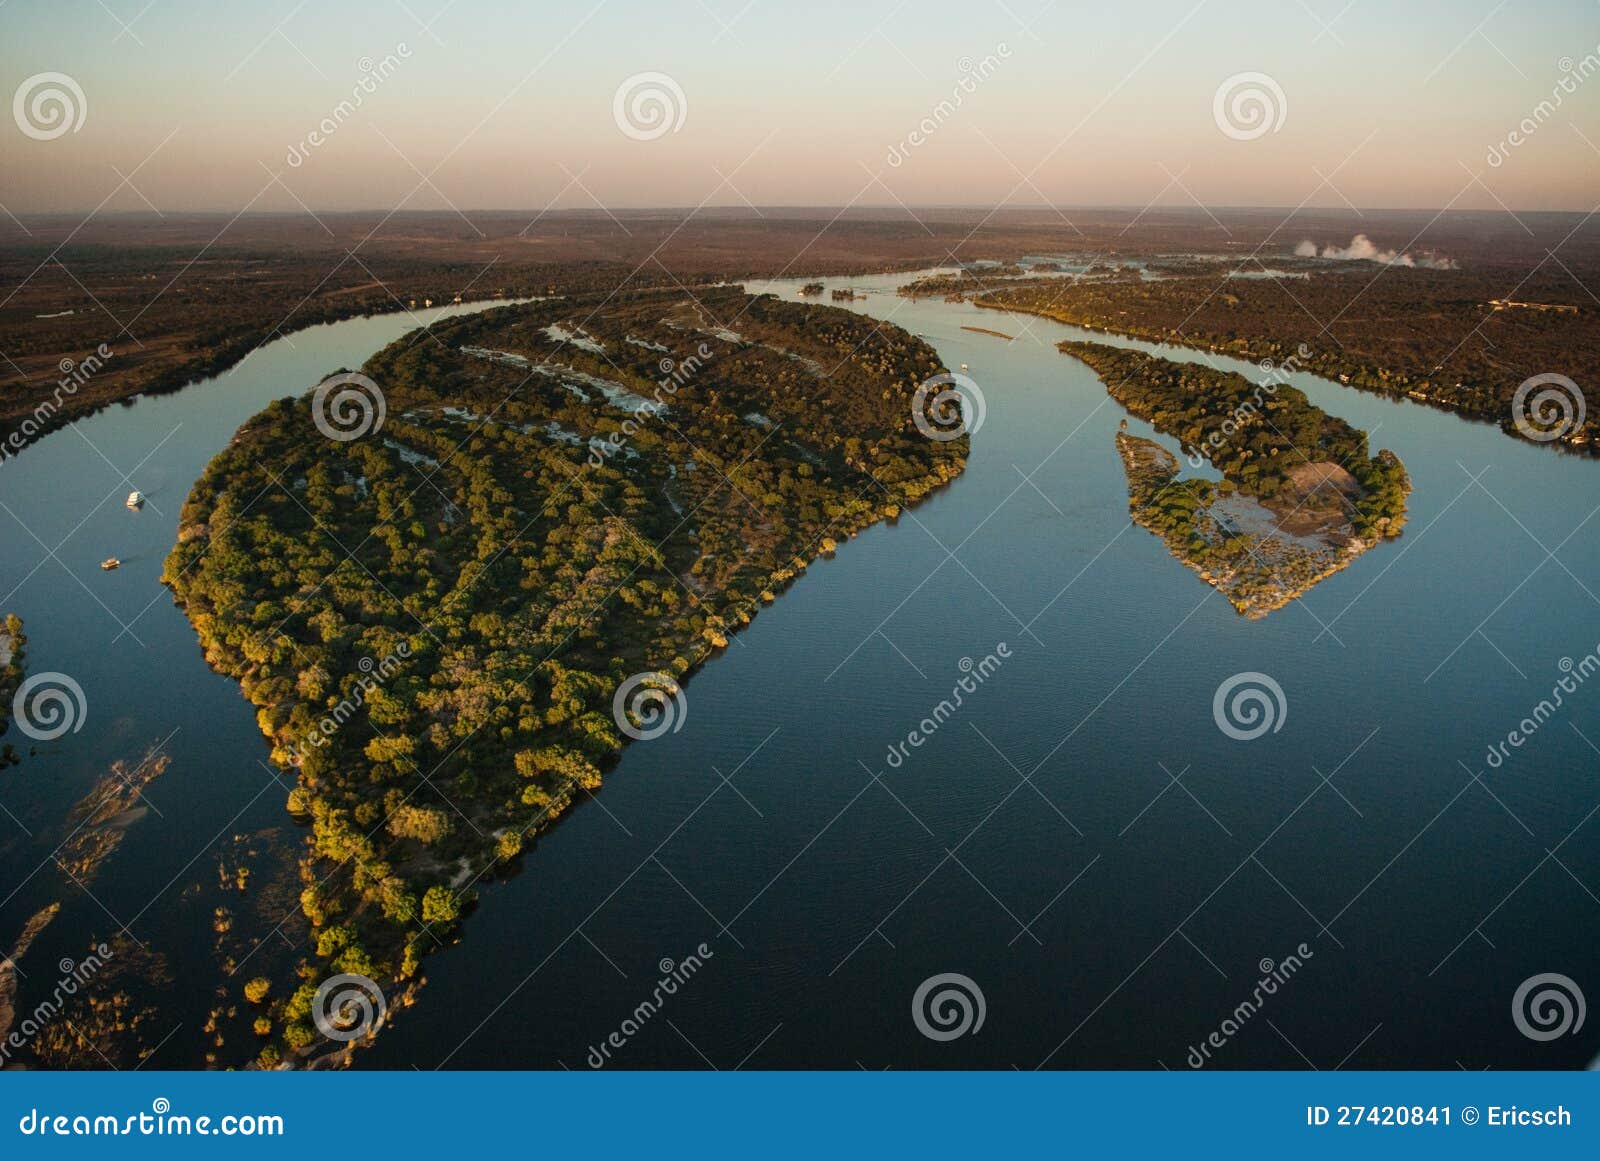 zambezi river from the air